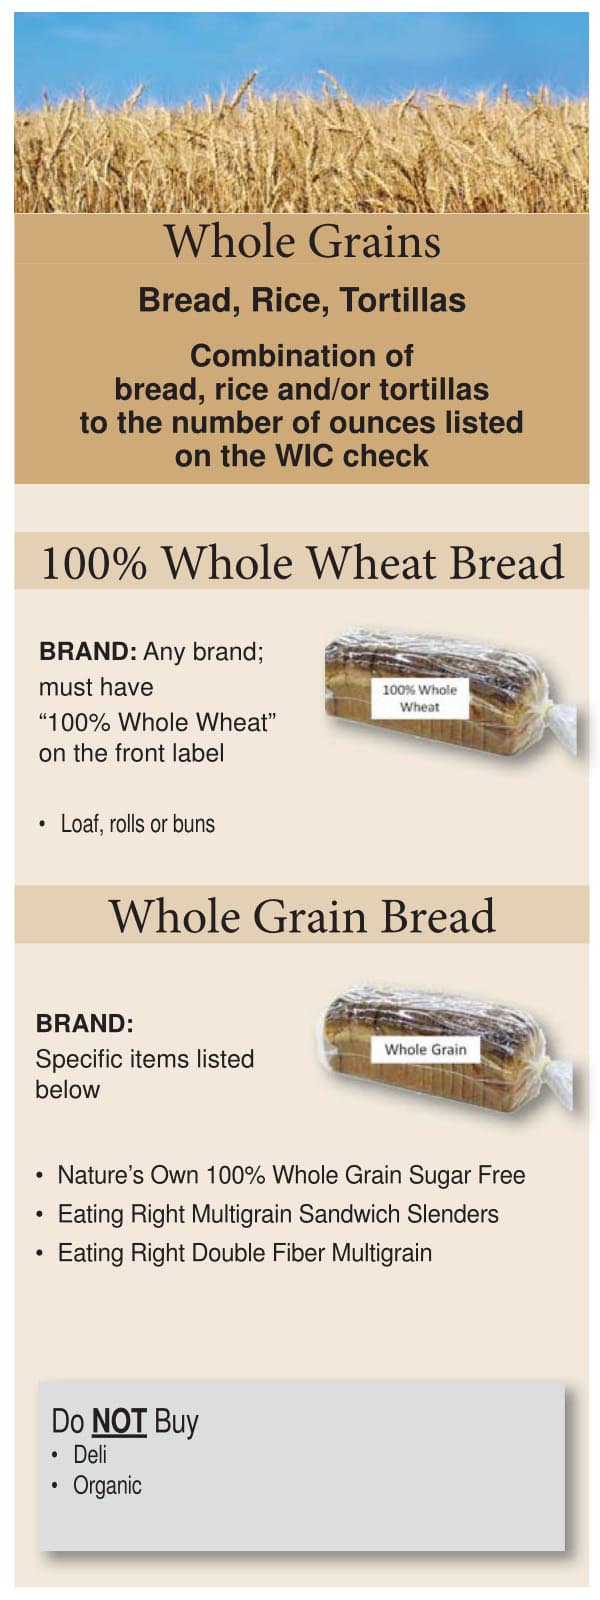 Colorado WIC Food List Whole Grains, Bread, Wheat Bread, Rice and Tortillas